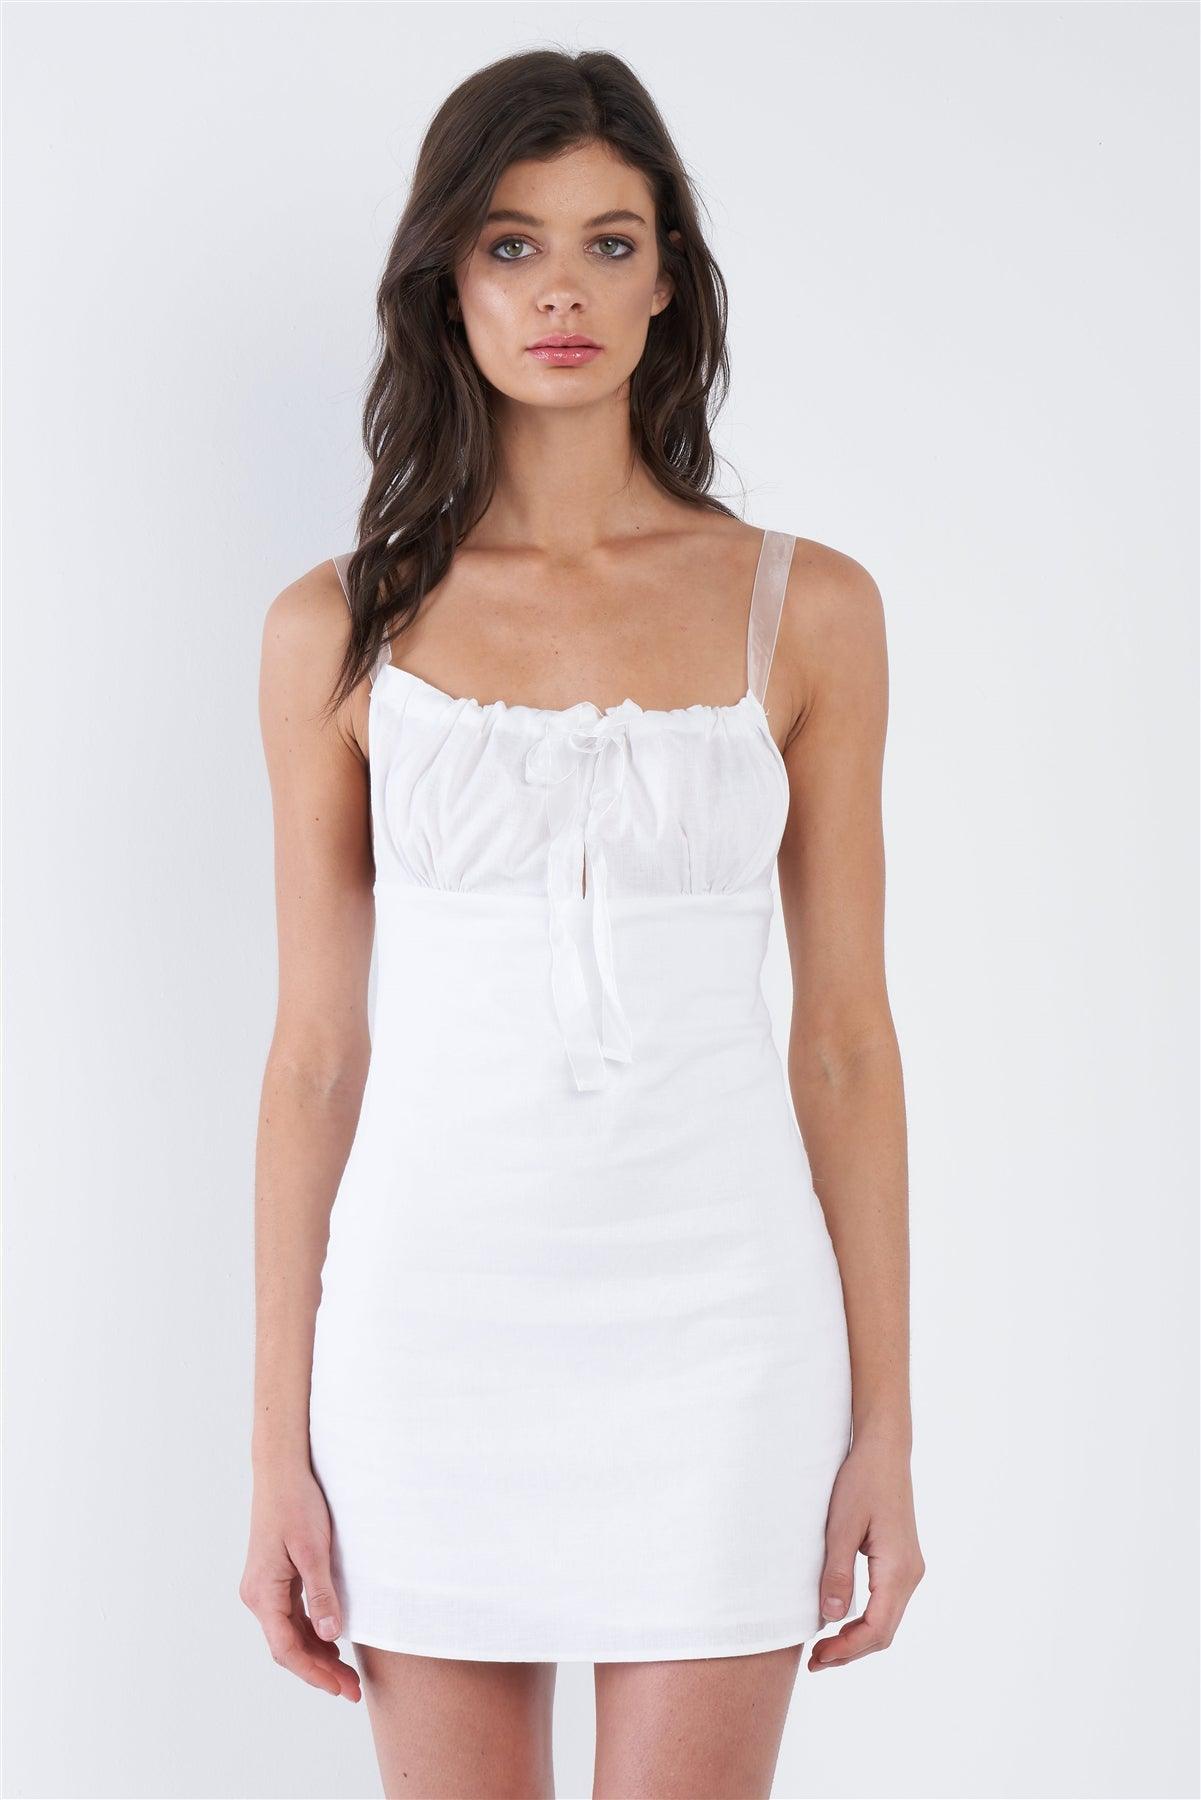 Off-White Sheer Ribbon Adjustable Strap Open Back Mini Chic Dress /3-2-1